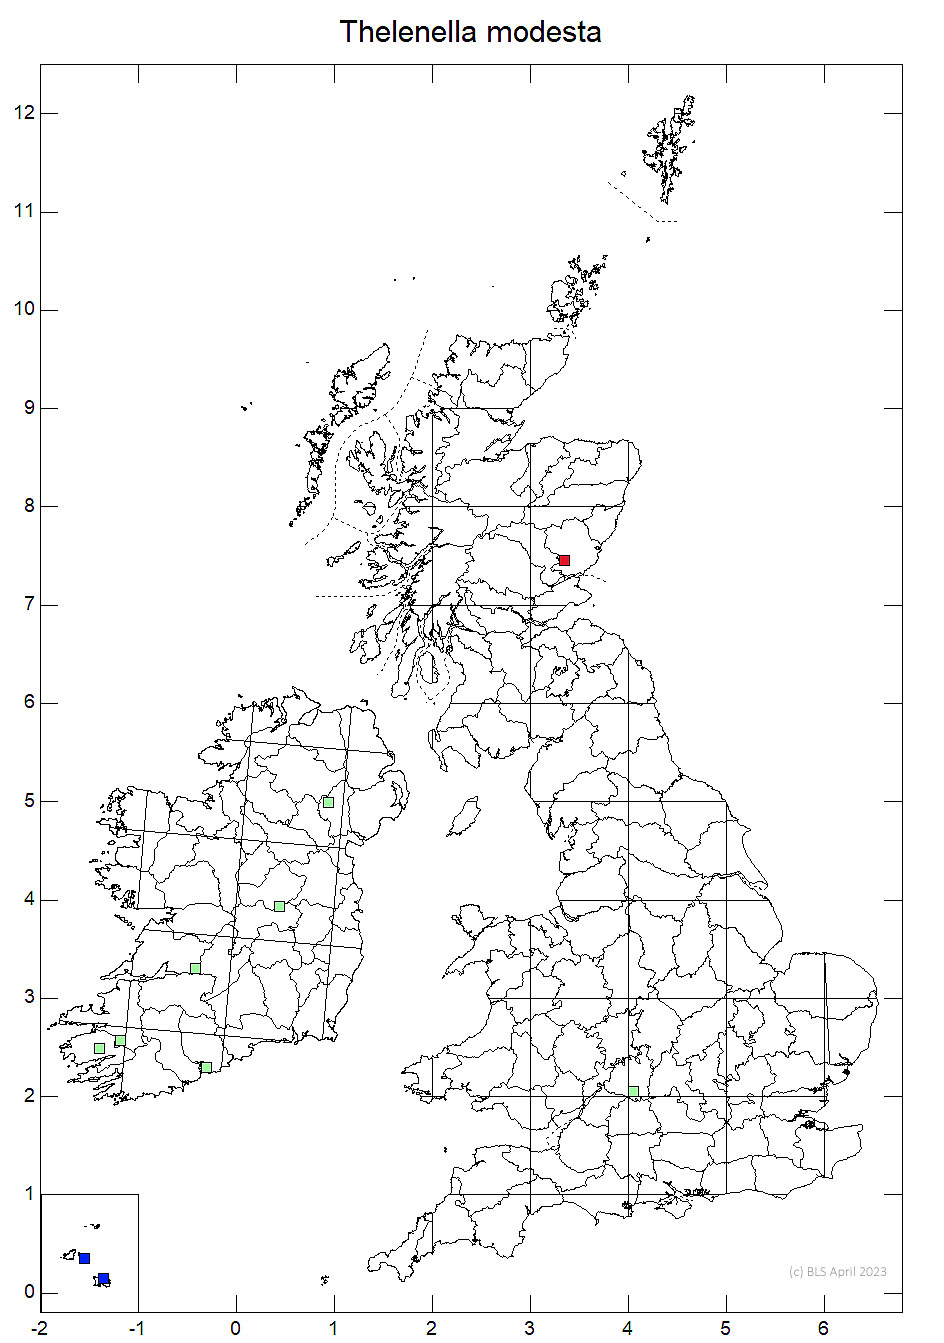 Thelenella modesta 10km sq distribution map